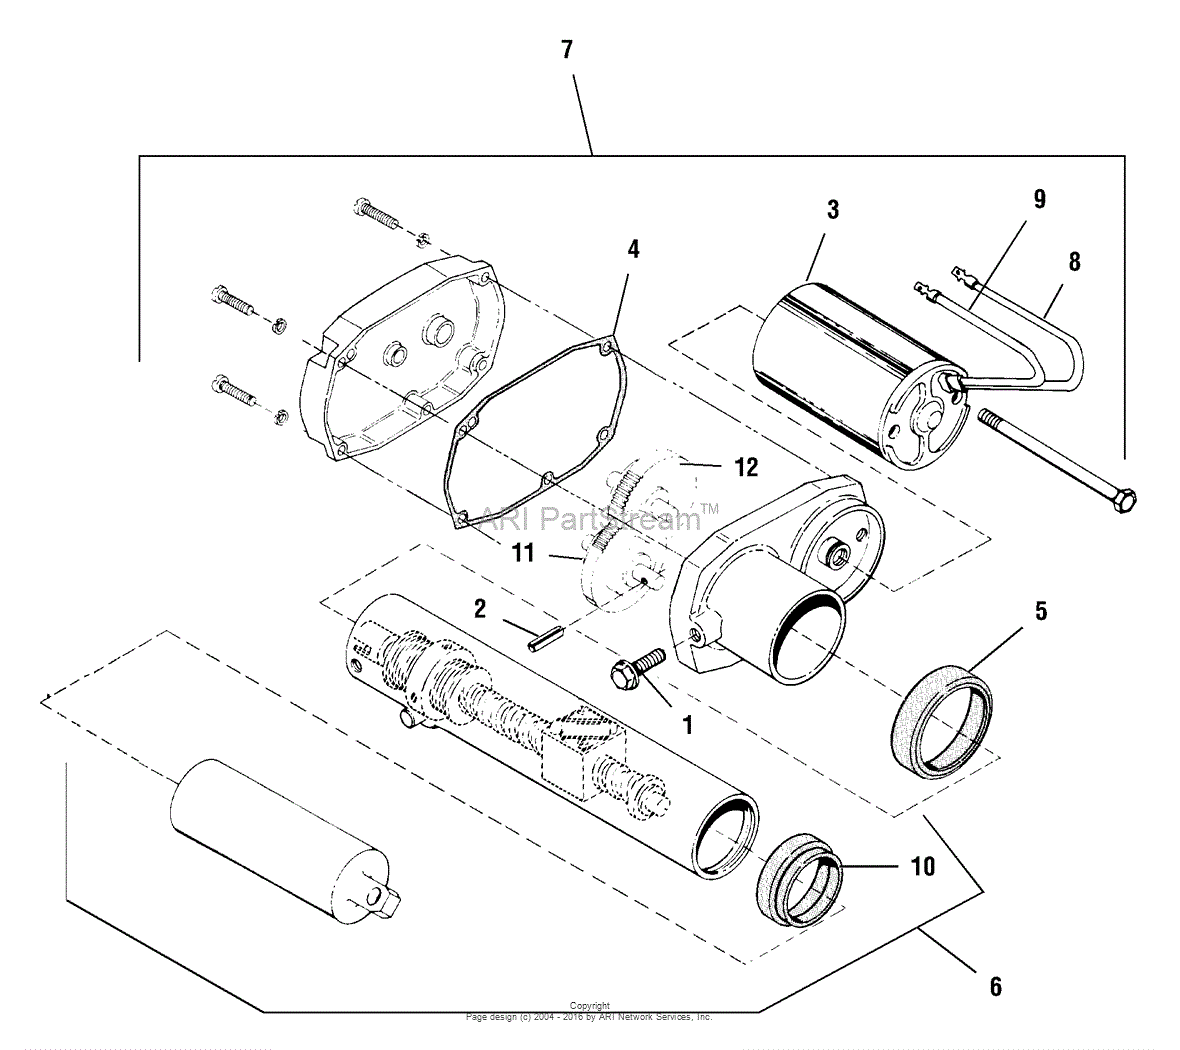 little rocker hitch service parts manual